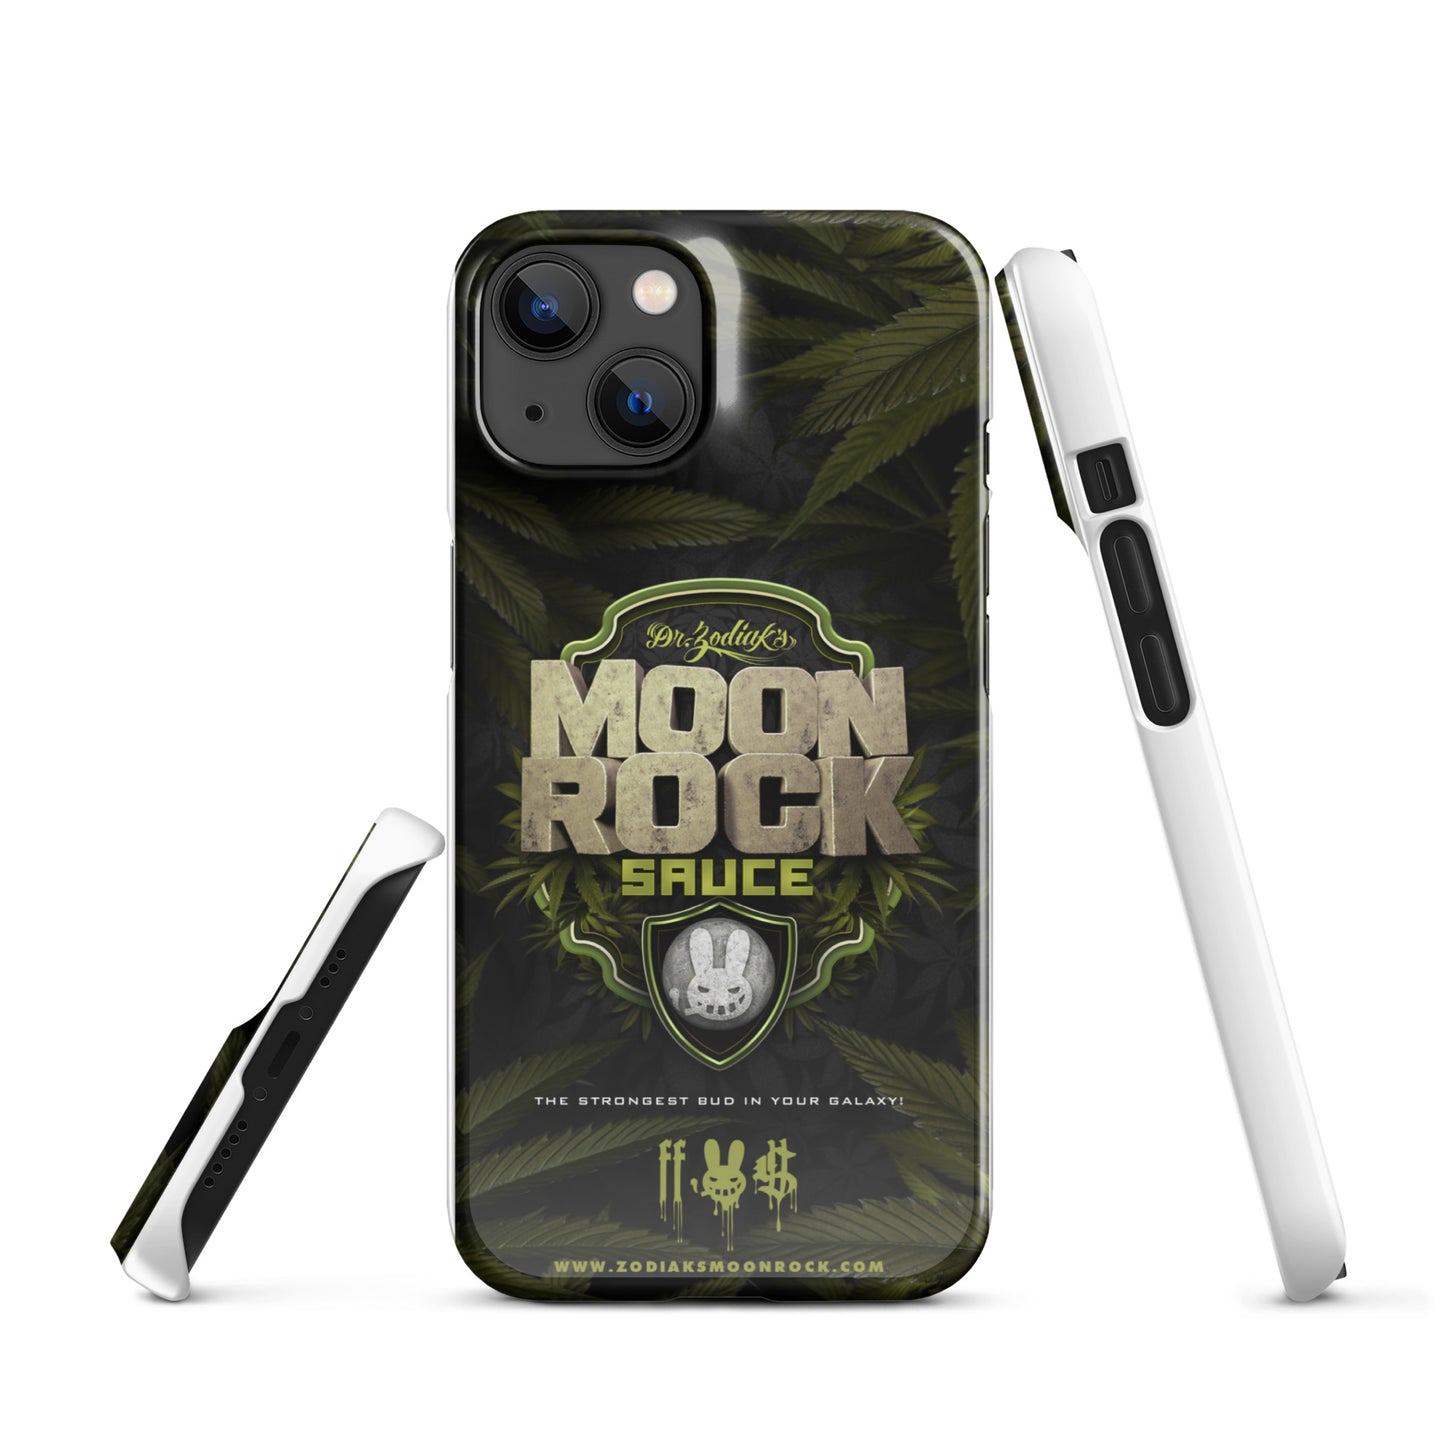 Dr. Zodiak's Moonrock - OG Sauce - Snap case for iPhone®